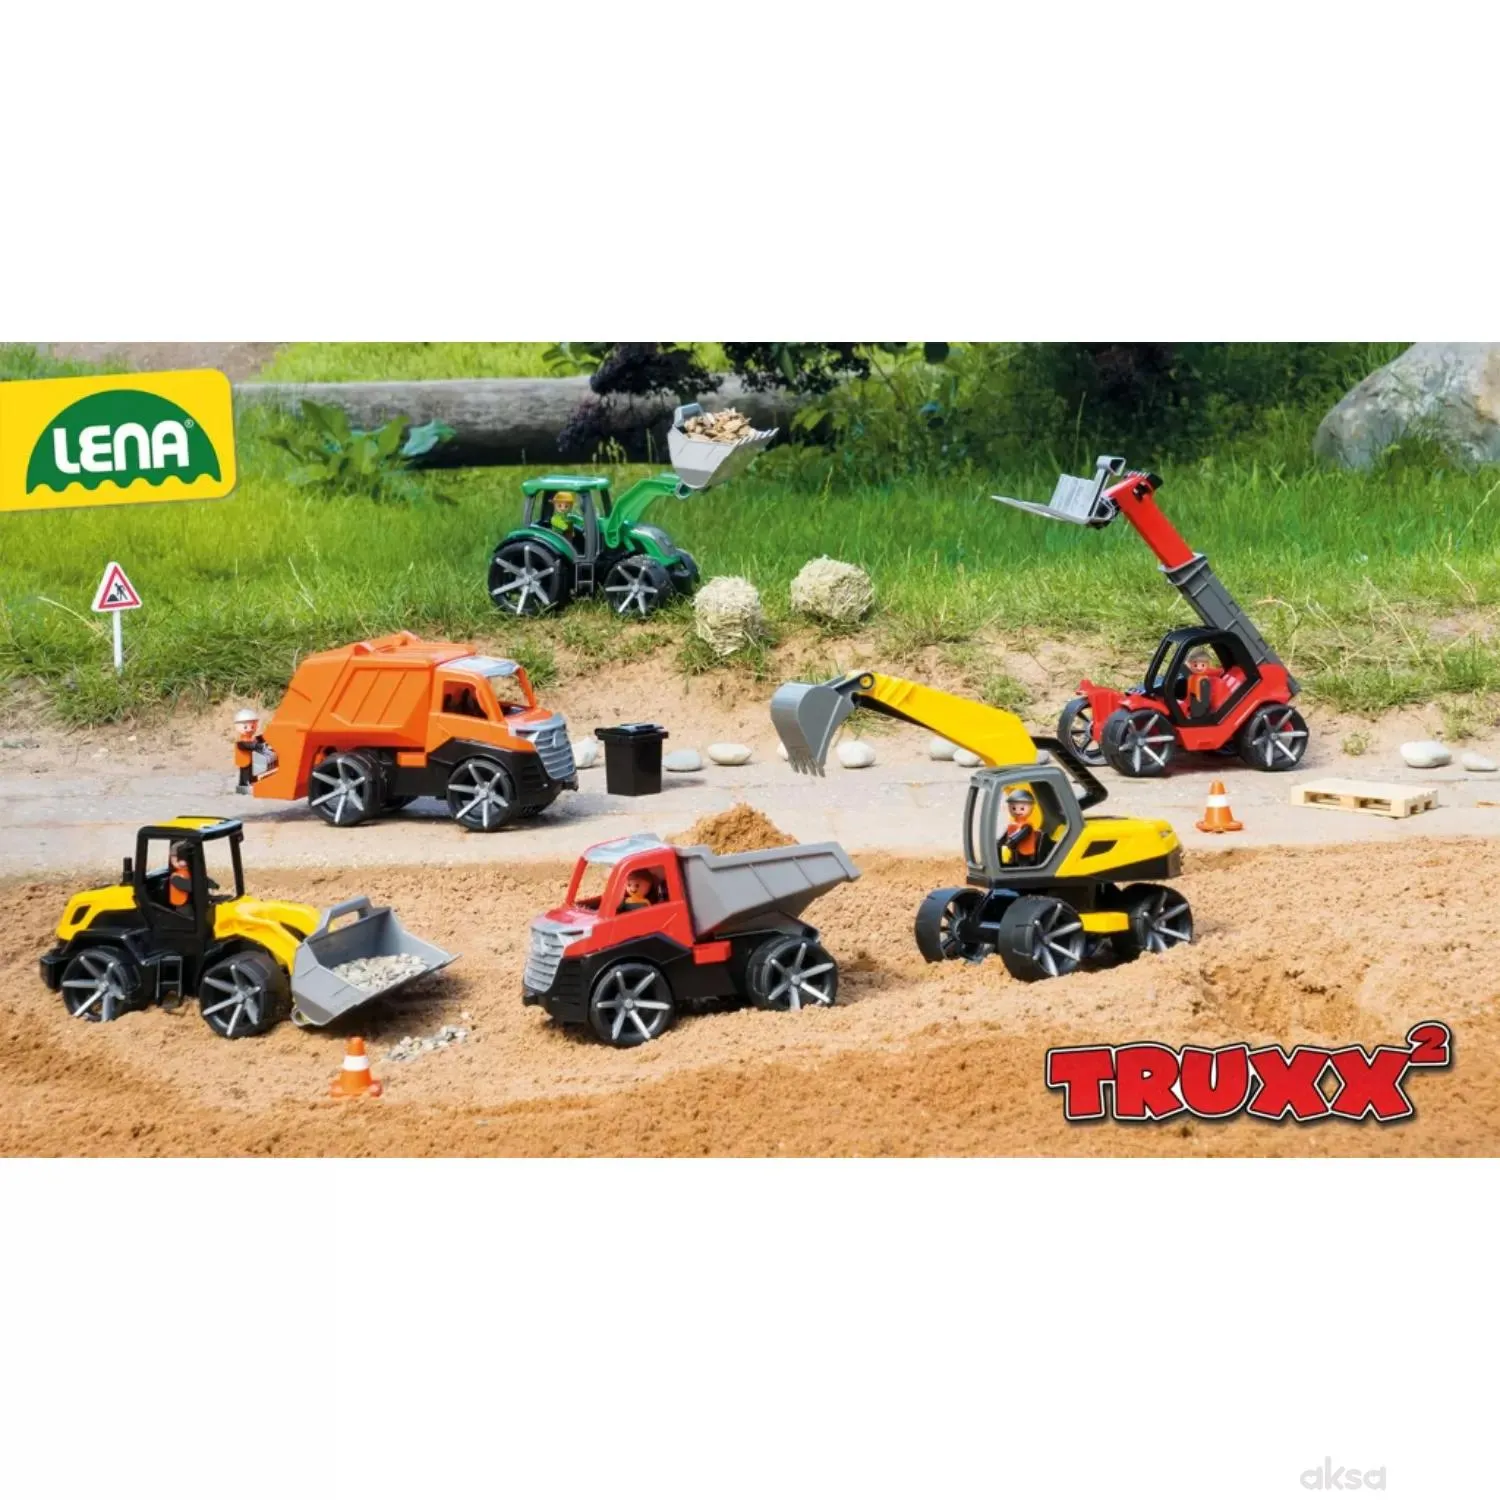 Lena igračka Truxx2 traktor 